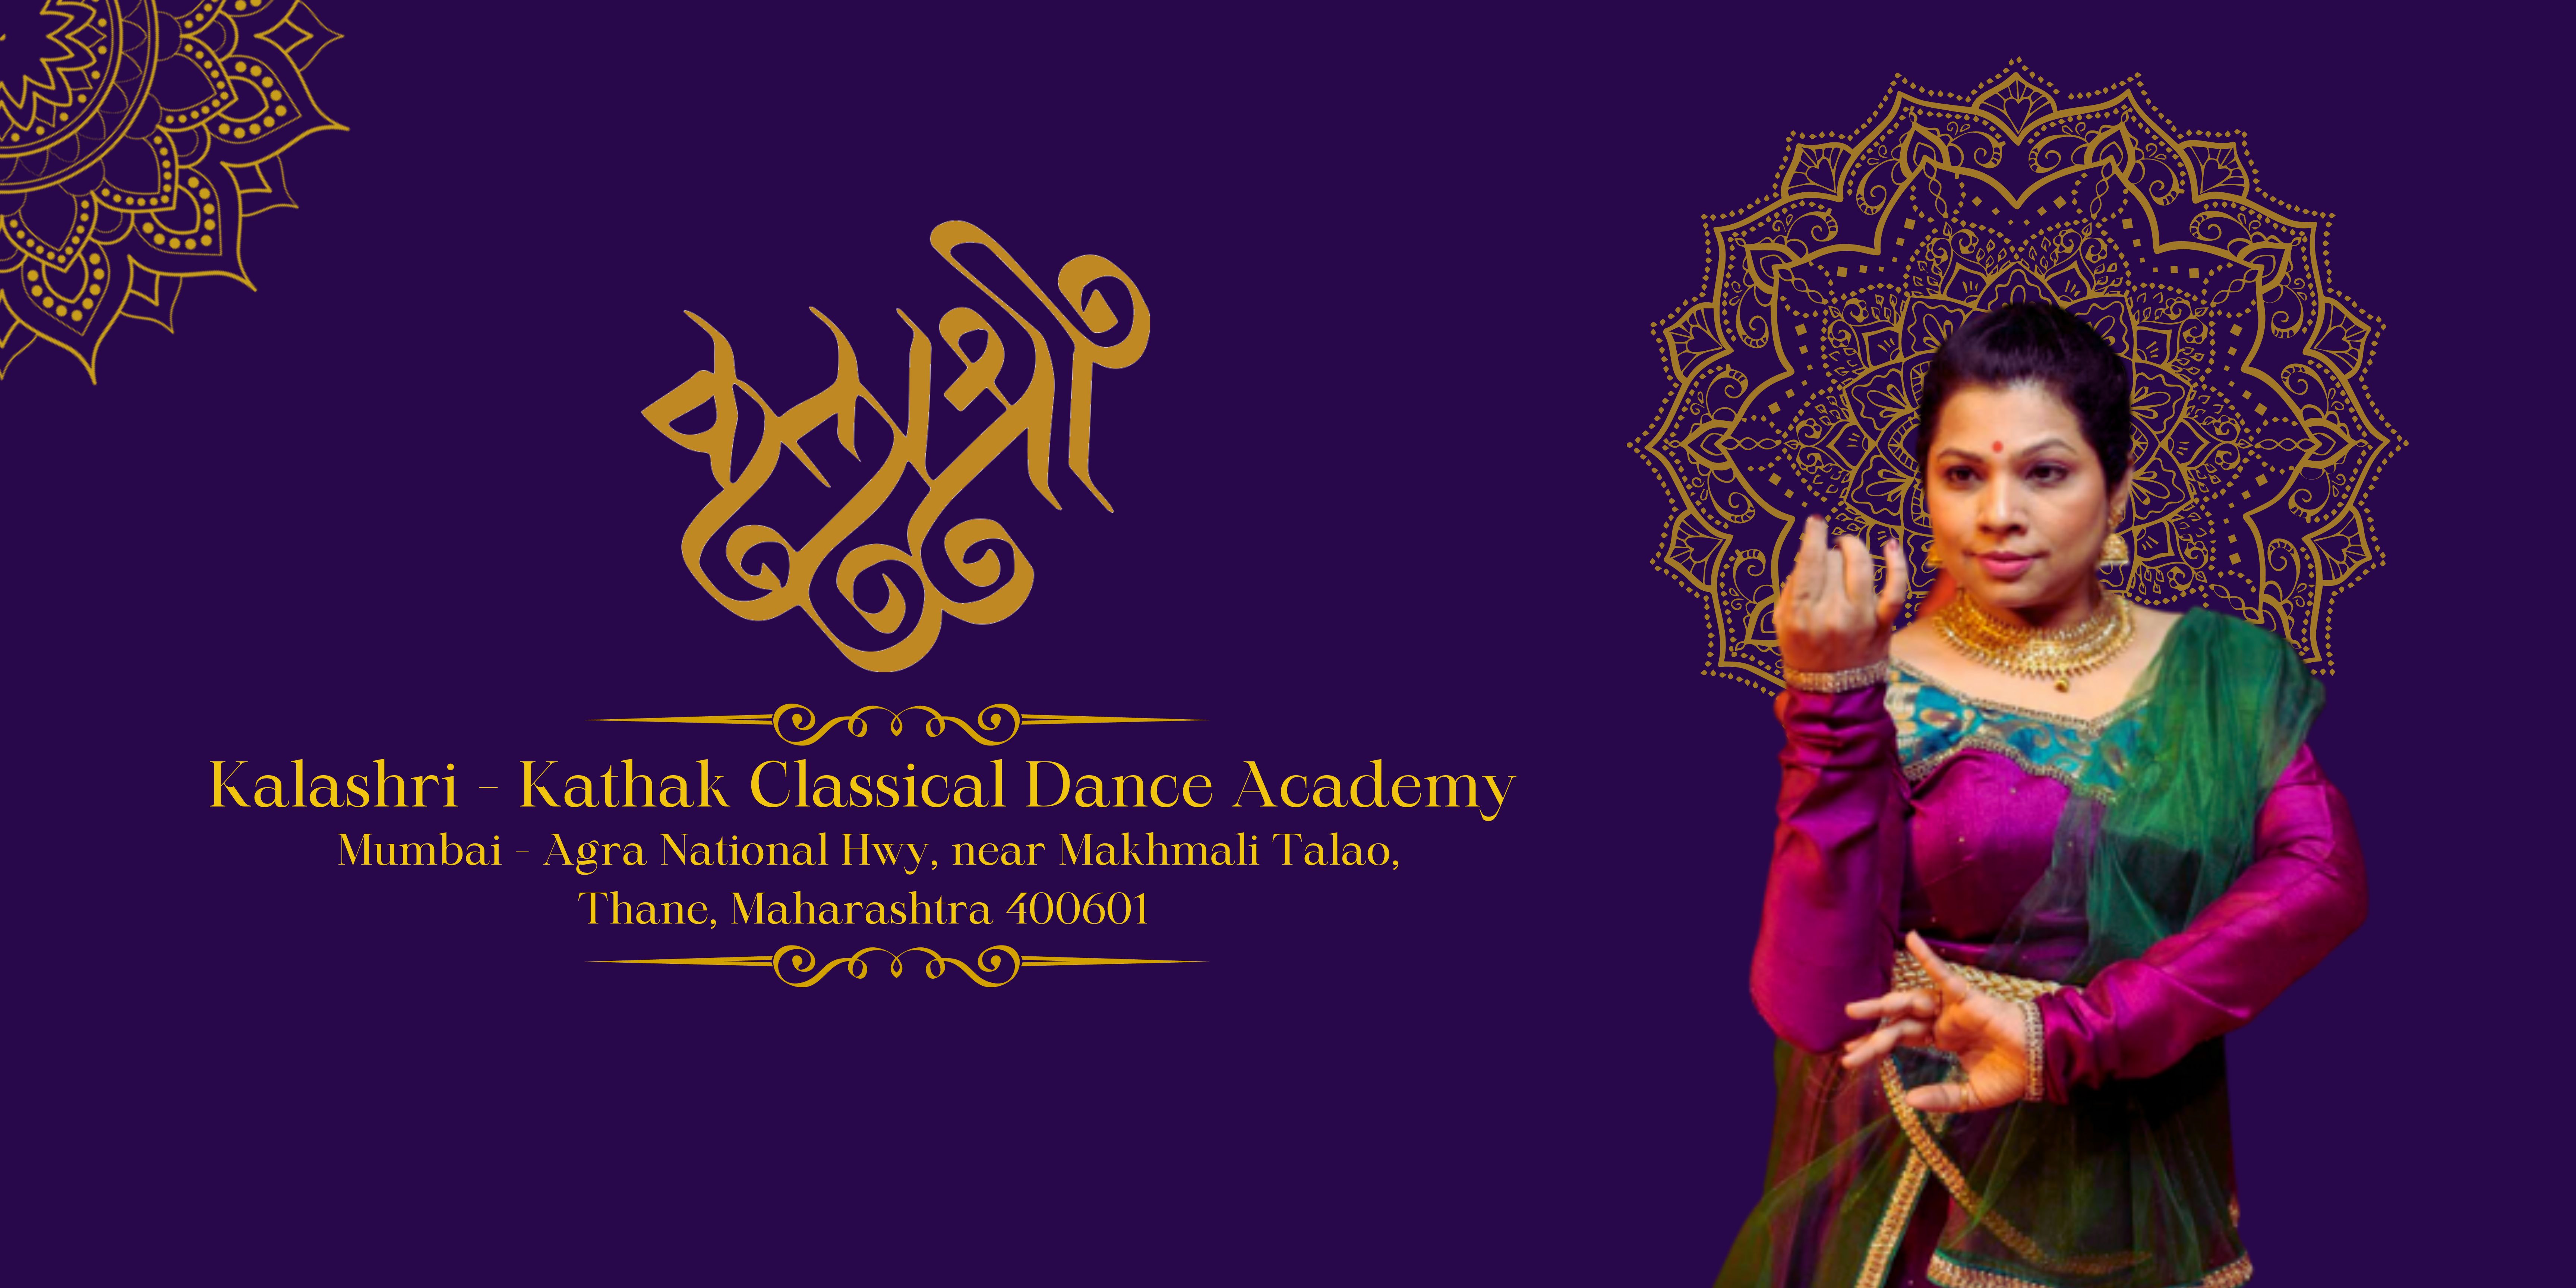 Kalashri kathak classical dance academy